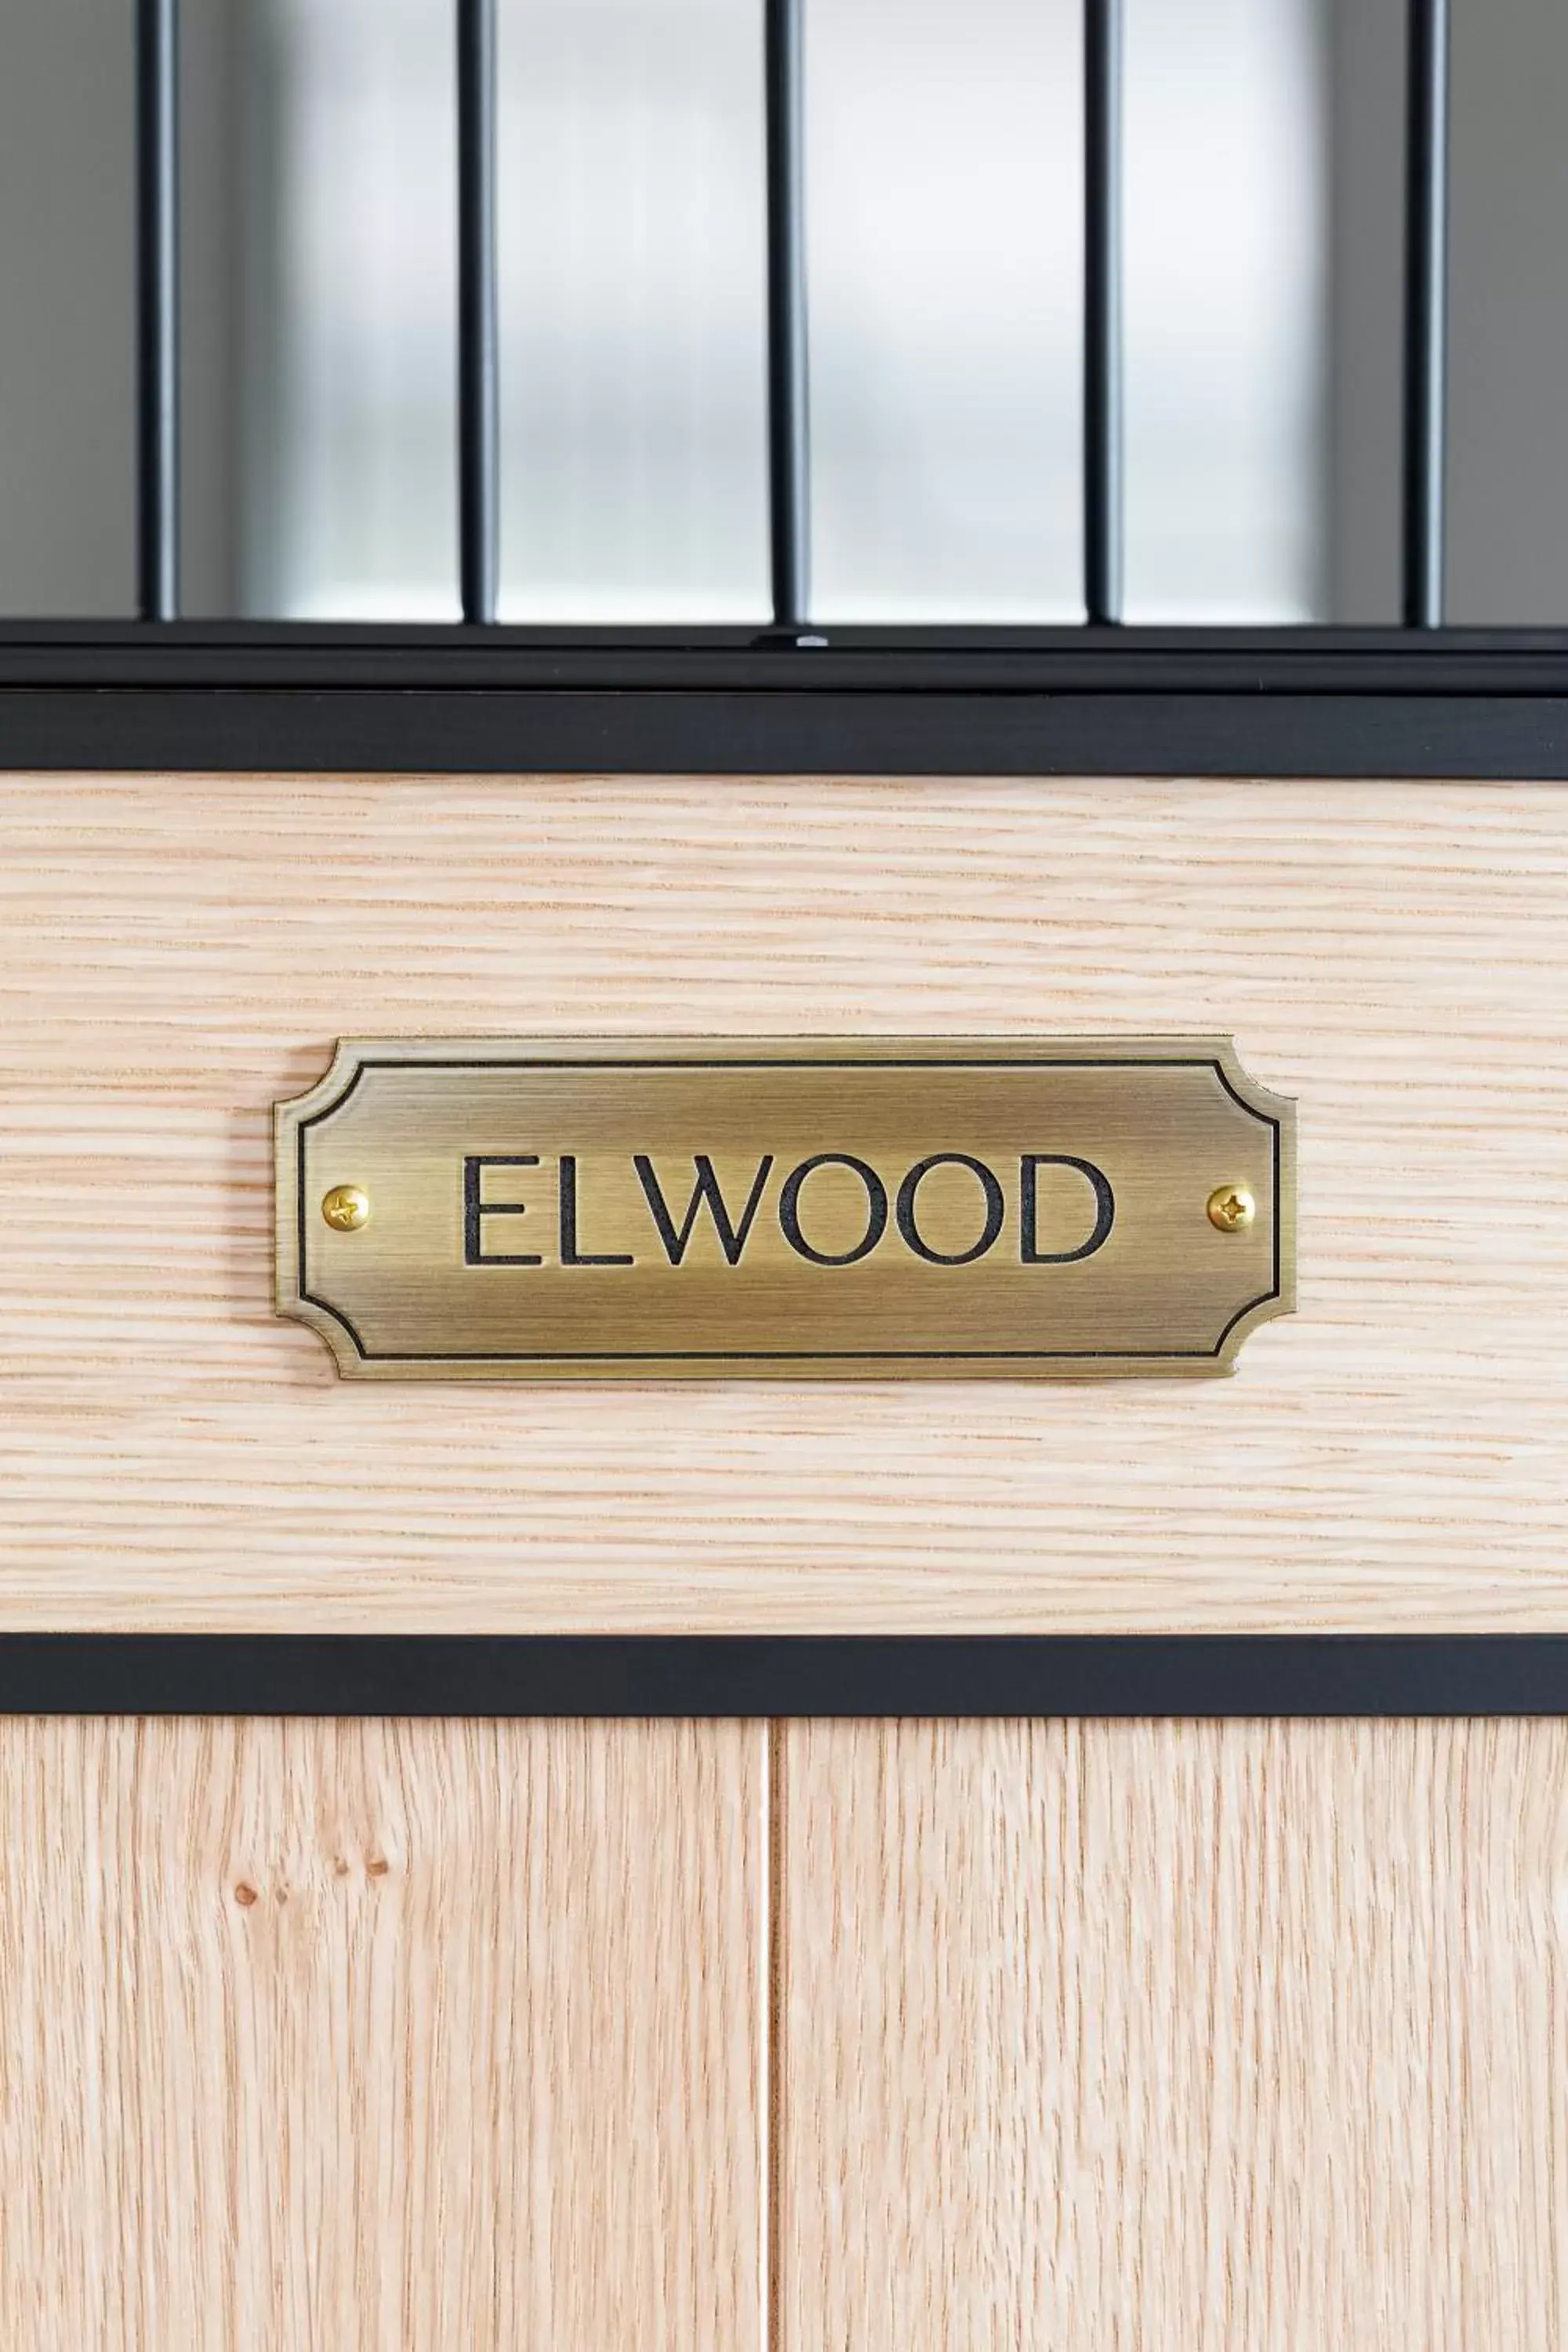 Property logo or sign in Elwood Hotel & Suites